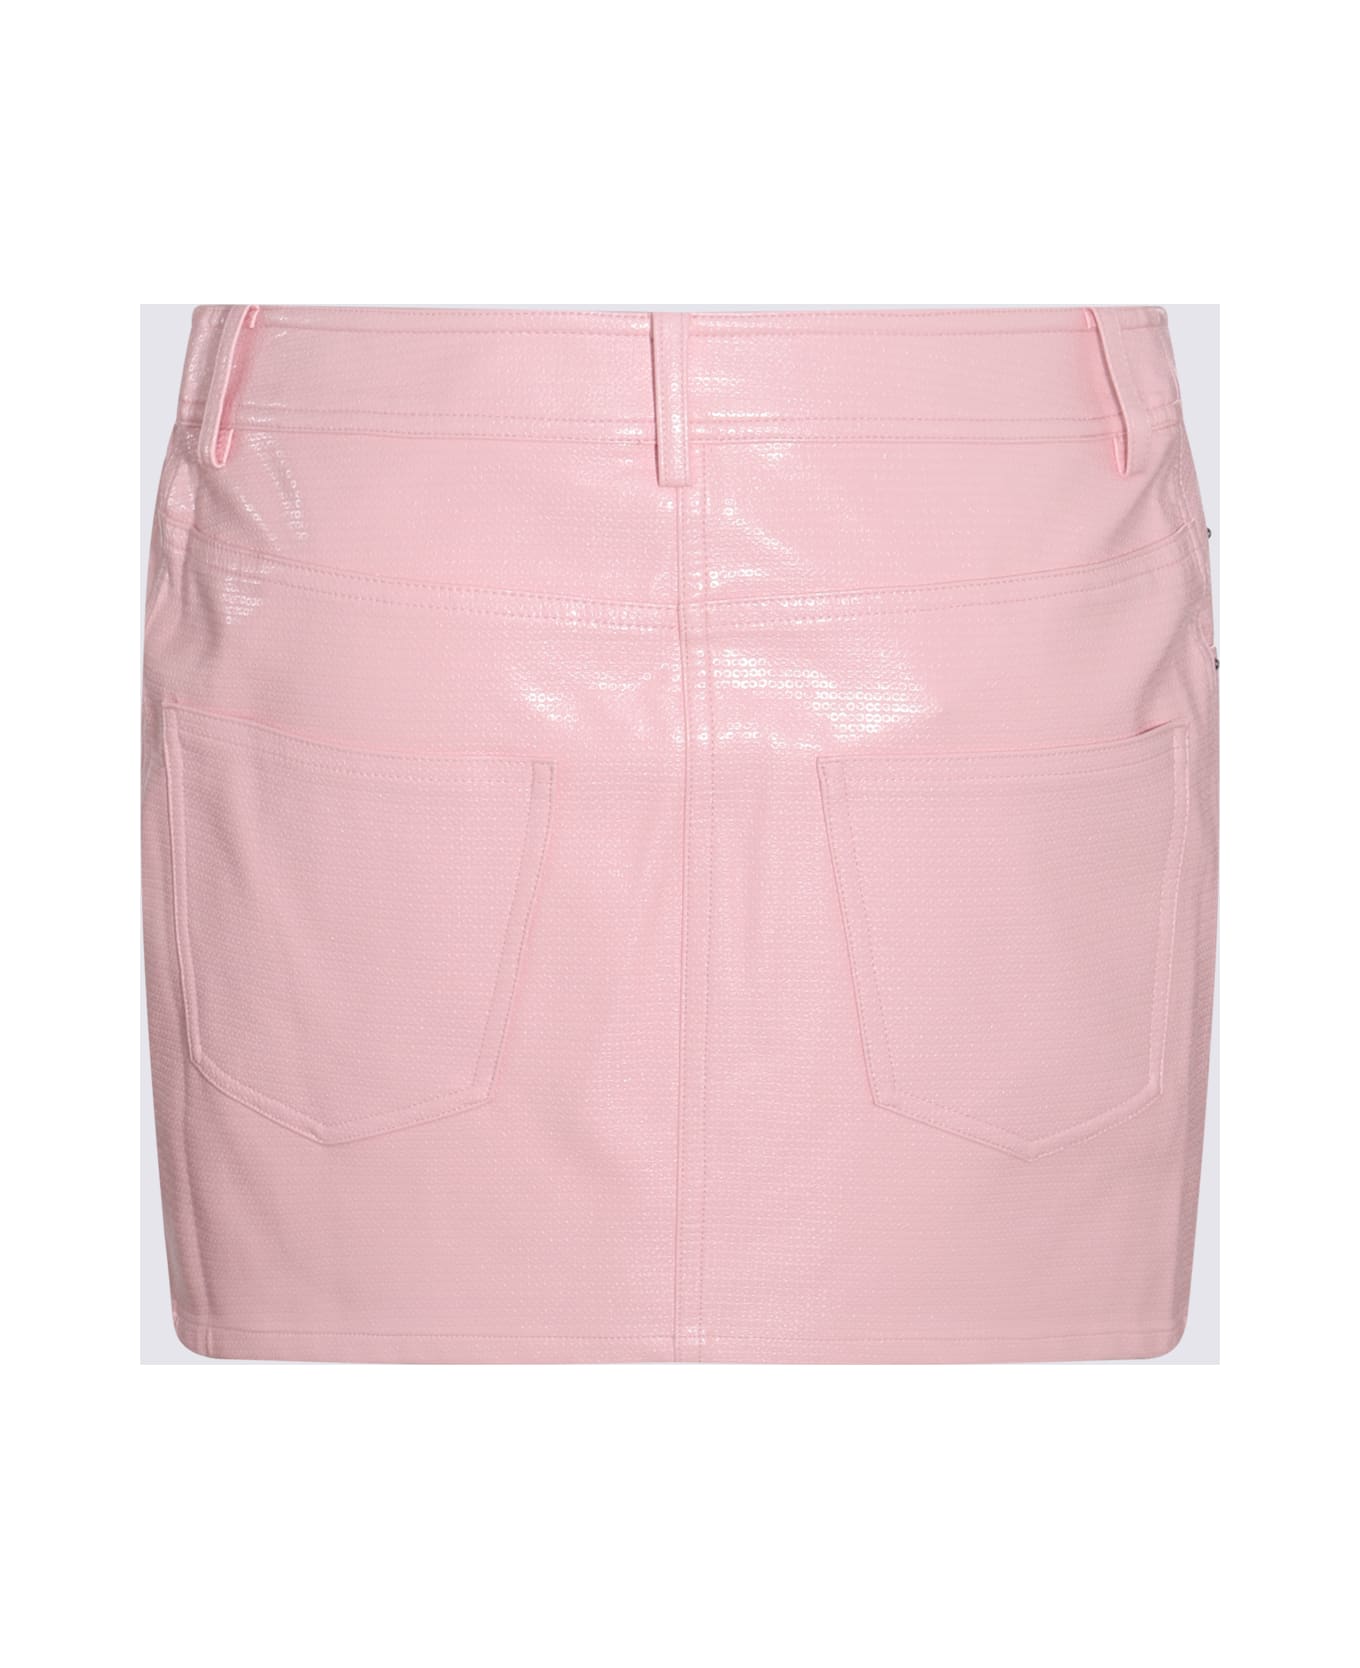 Rotate by Birger Christensen Pink Vynil Mini Skirt - Pink スカート